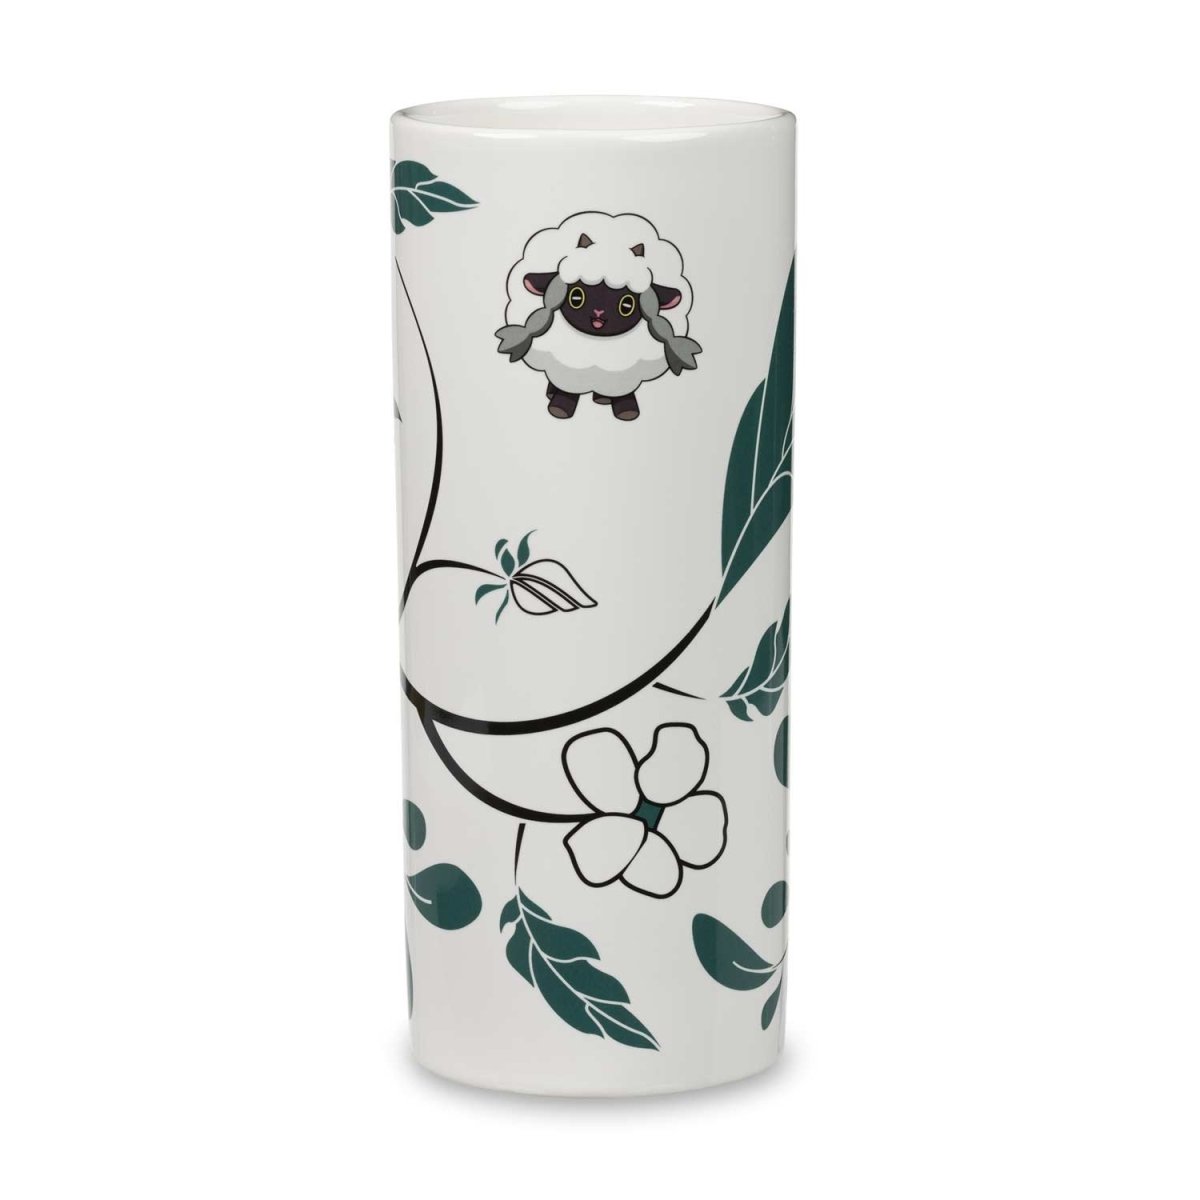 Wooloo Pokémon Home Accents White Ceramic Vase